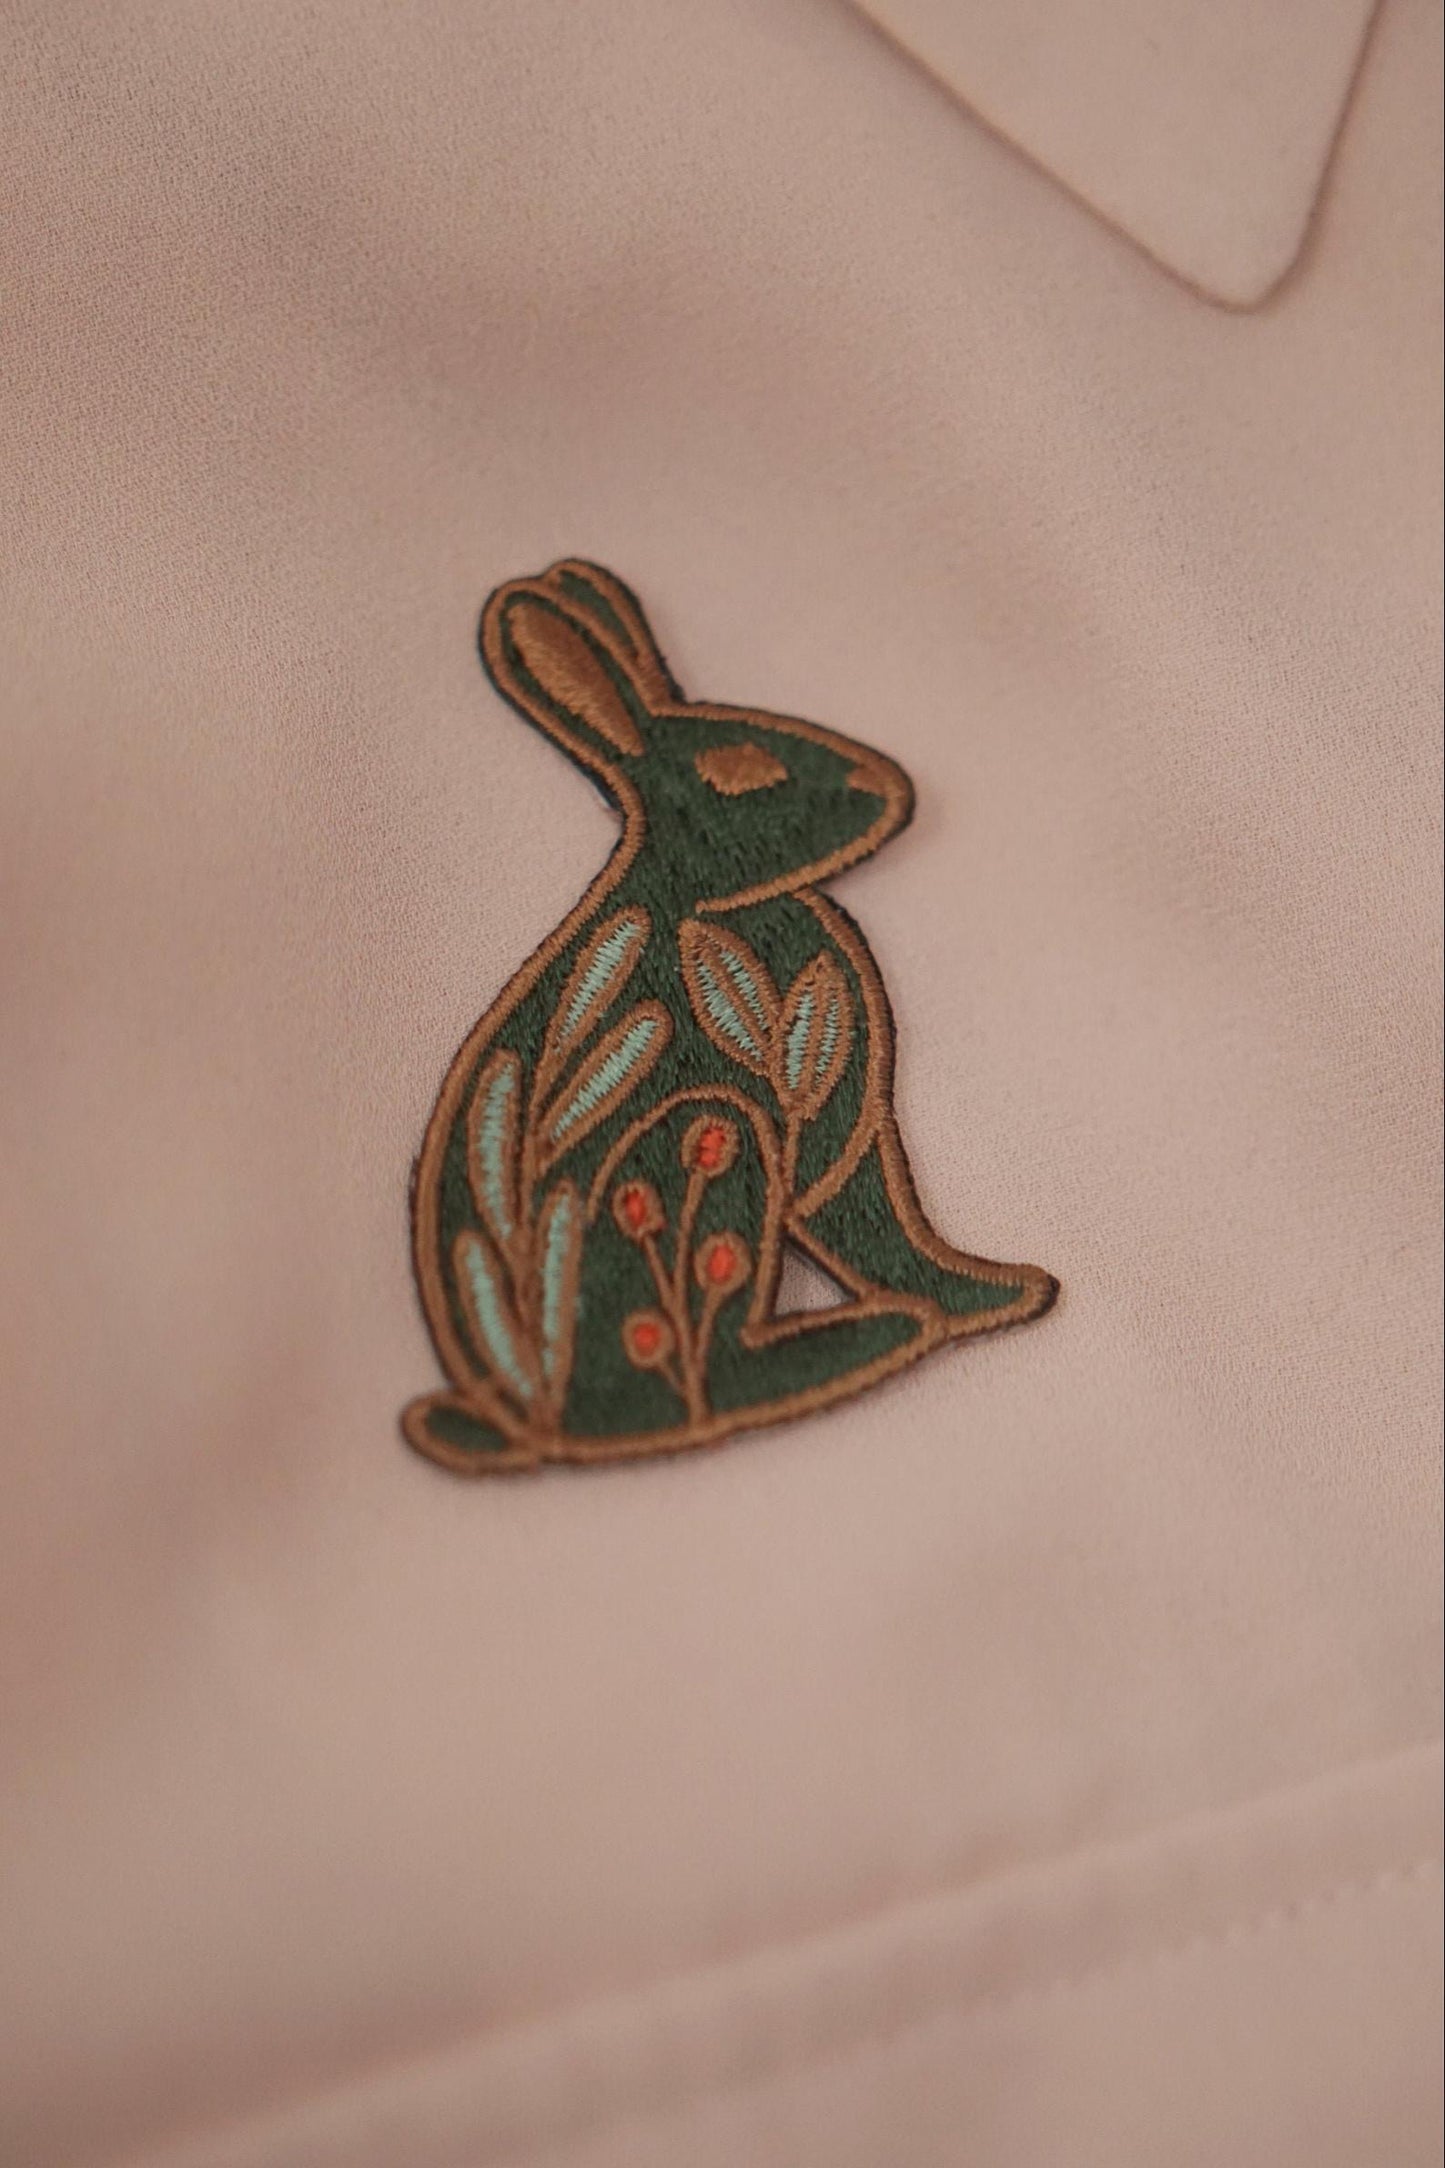 Justine Gilbuena - Tiny Iron On Patch - Rabbit